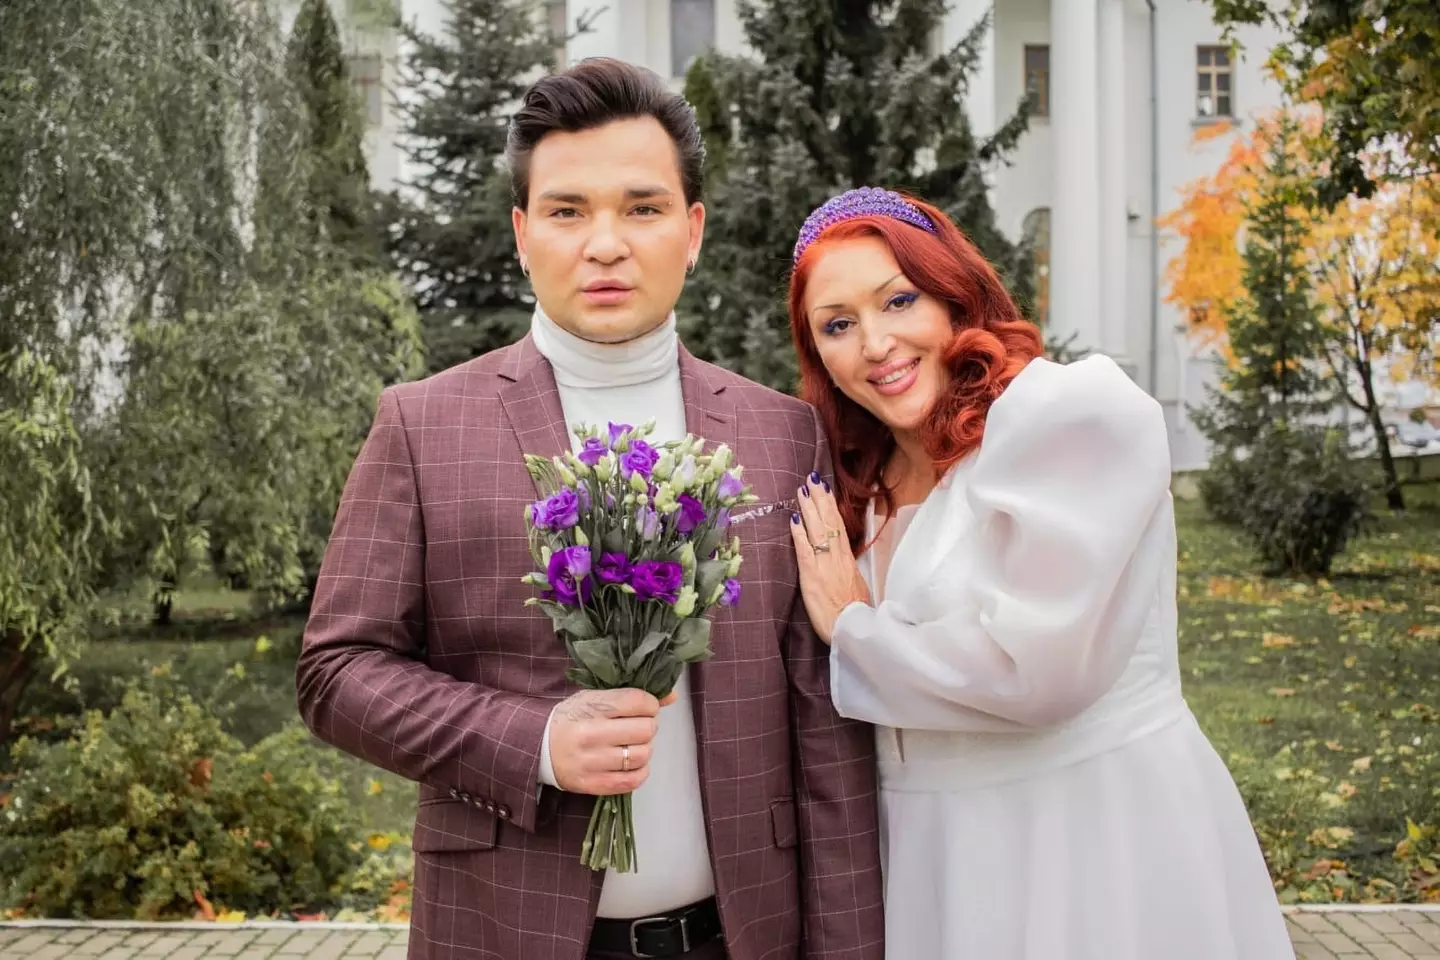 Aisylu Chizhevskaya Mingalim married her adopted son last year. (Newsflash)